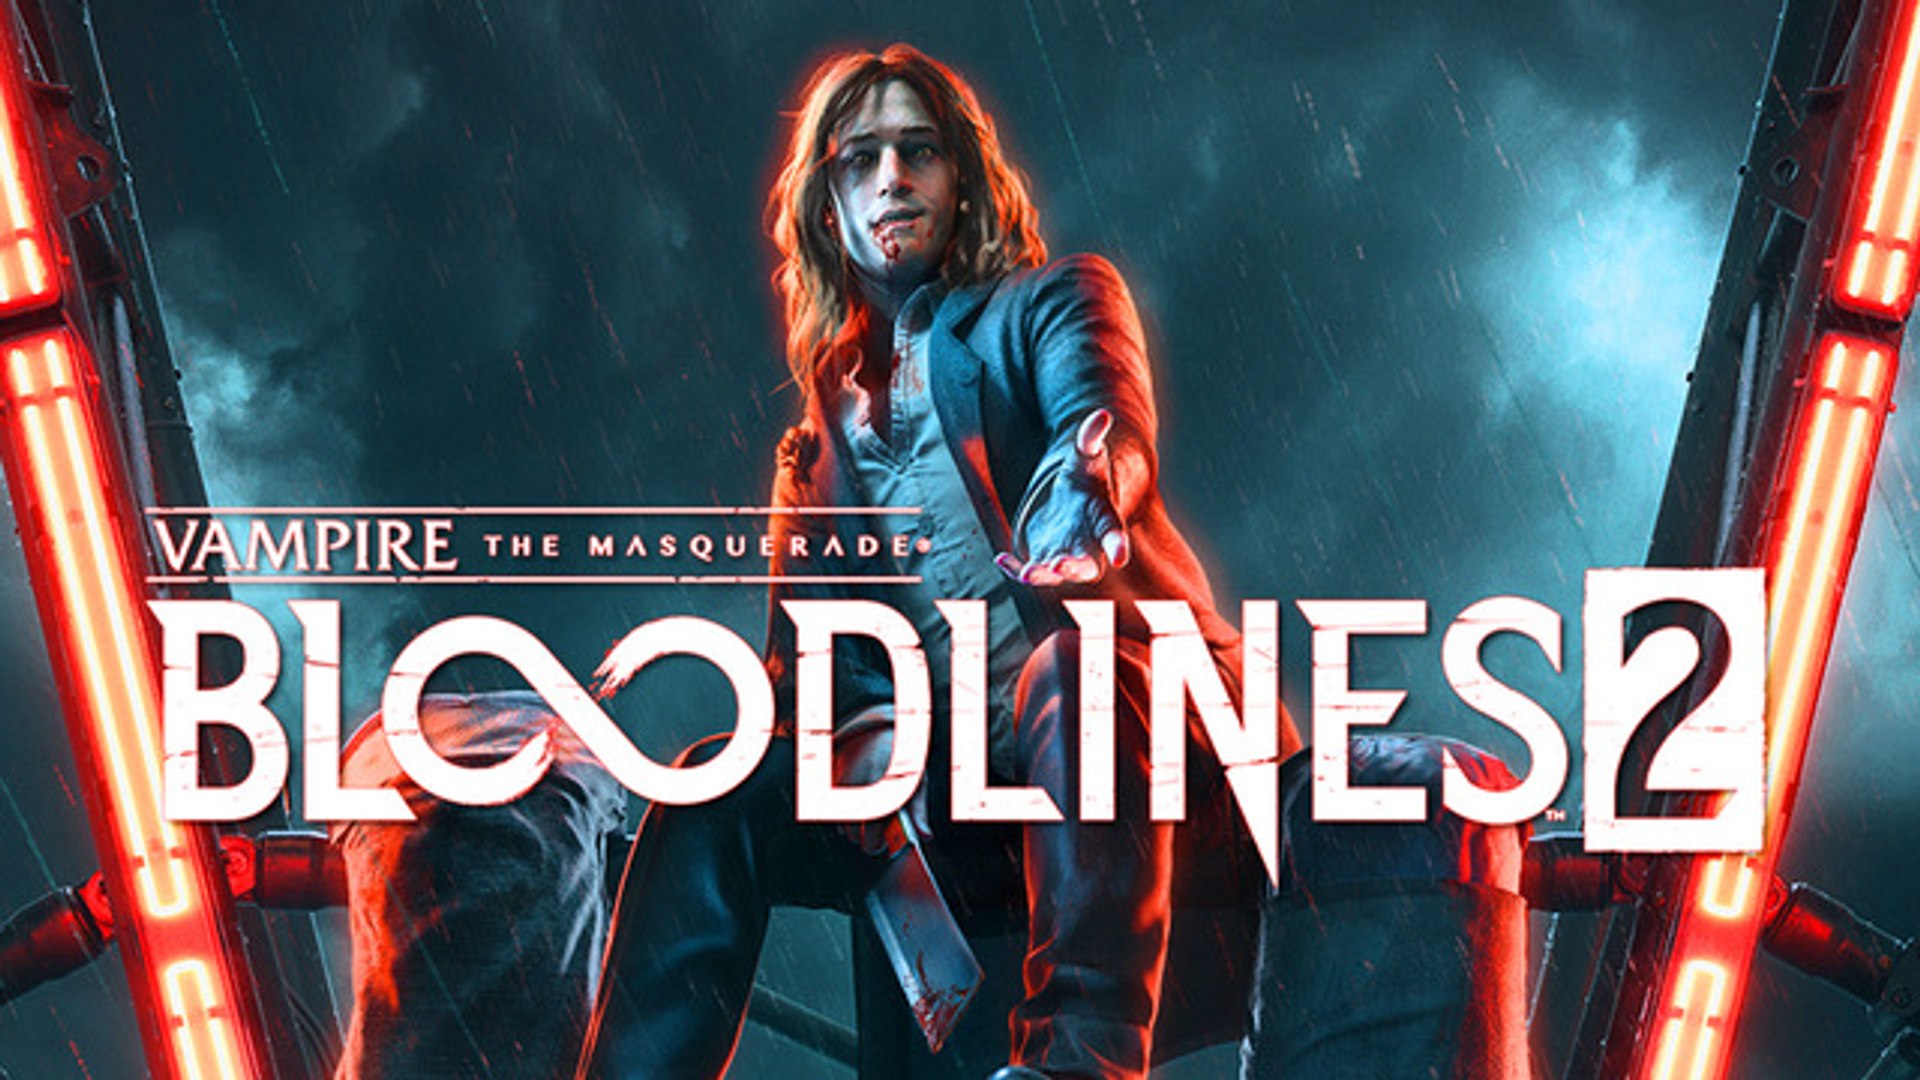 vampire-the-masquerade-bloodlines-2 Vampire: The Masquerade - Bloodlines 2: Novo Desenvolvedor e lançamento ano que vem